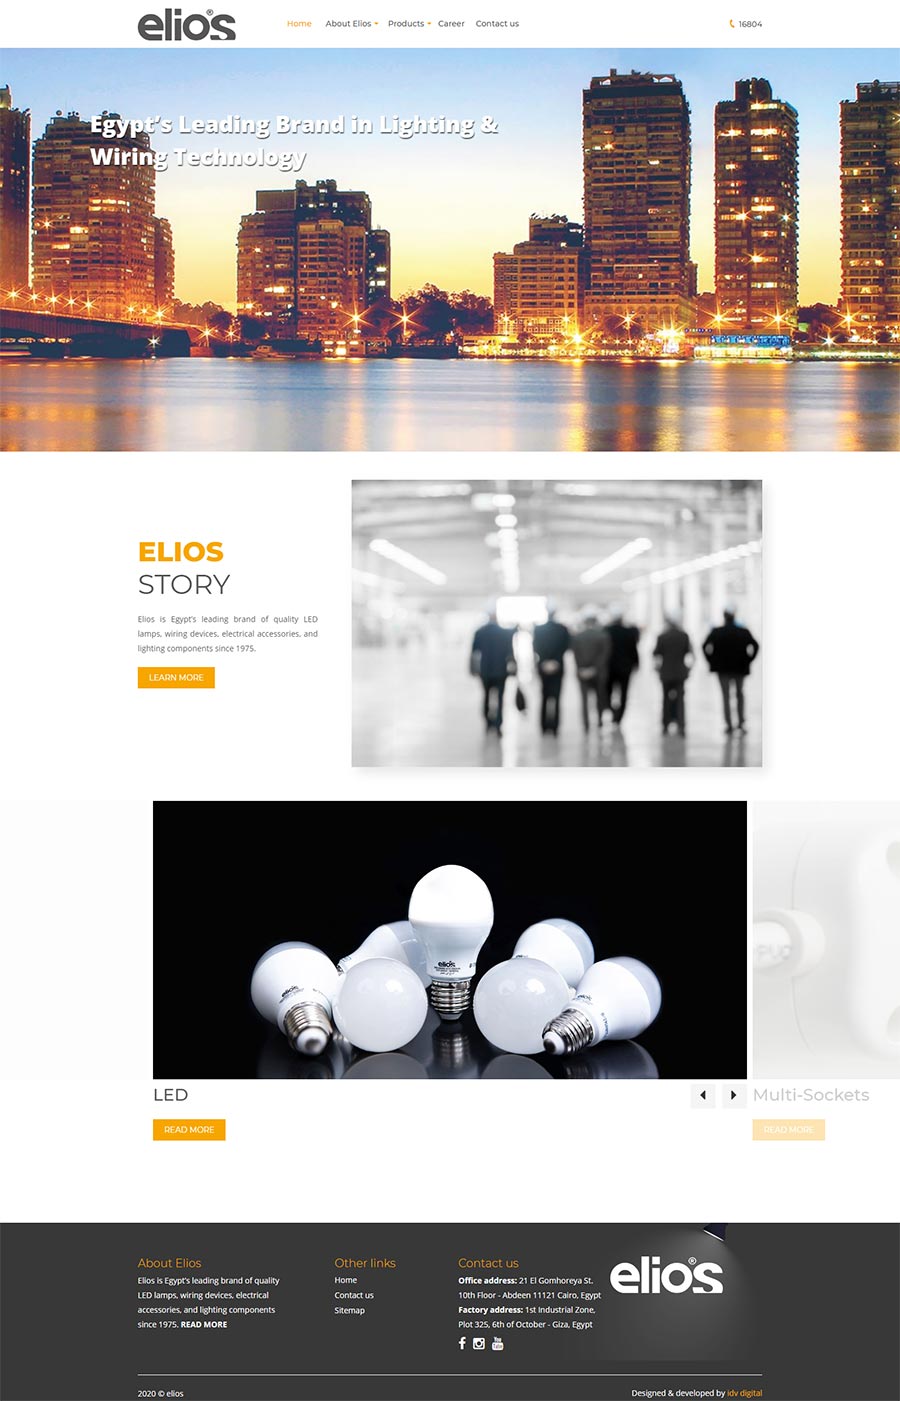 elios - web design in Egypt